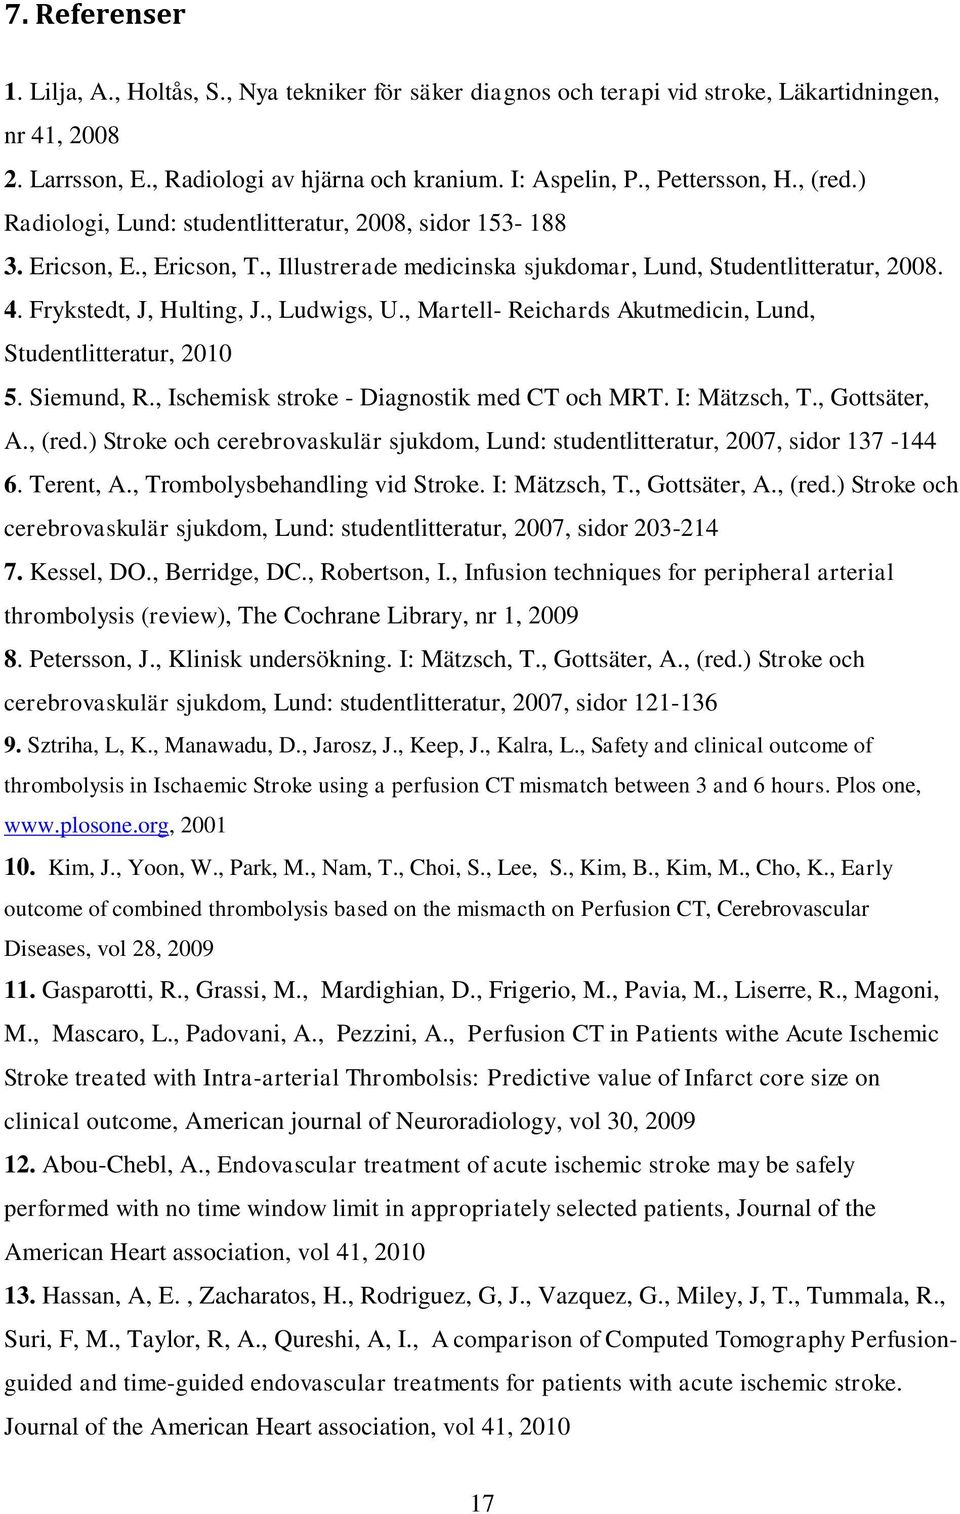 Frykstedt, J, Hulting, J., Ludwigs, U., Martell- Reichards Akutmedicin, Lund, Studentlitteratur, 2010 5. Siemund, R., Ischemisk stroke - Diagnostik med CT och MRT. I: Mätzsch, T., Gottsäter, A., (red.